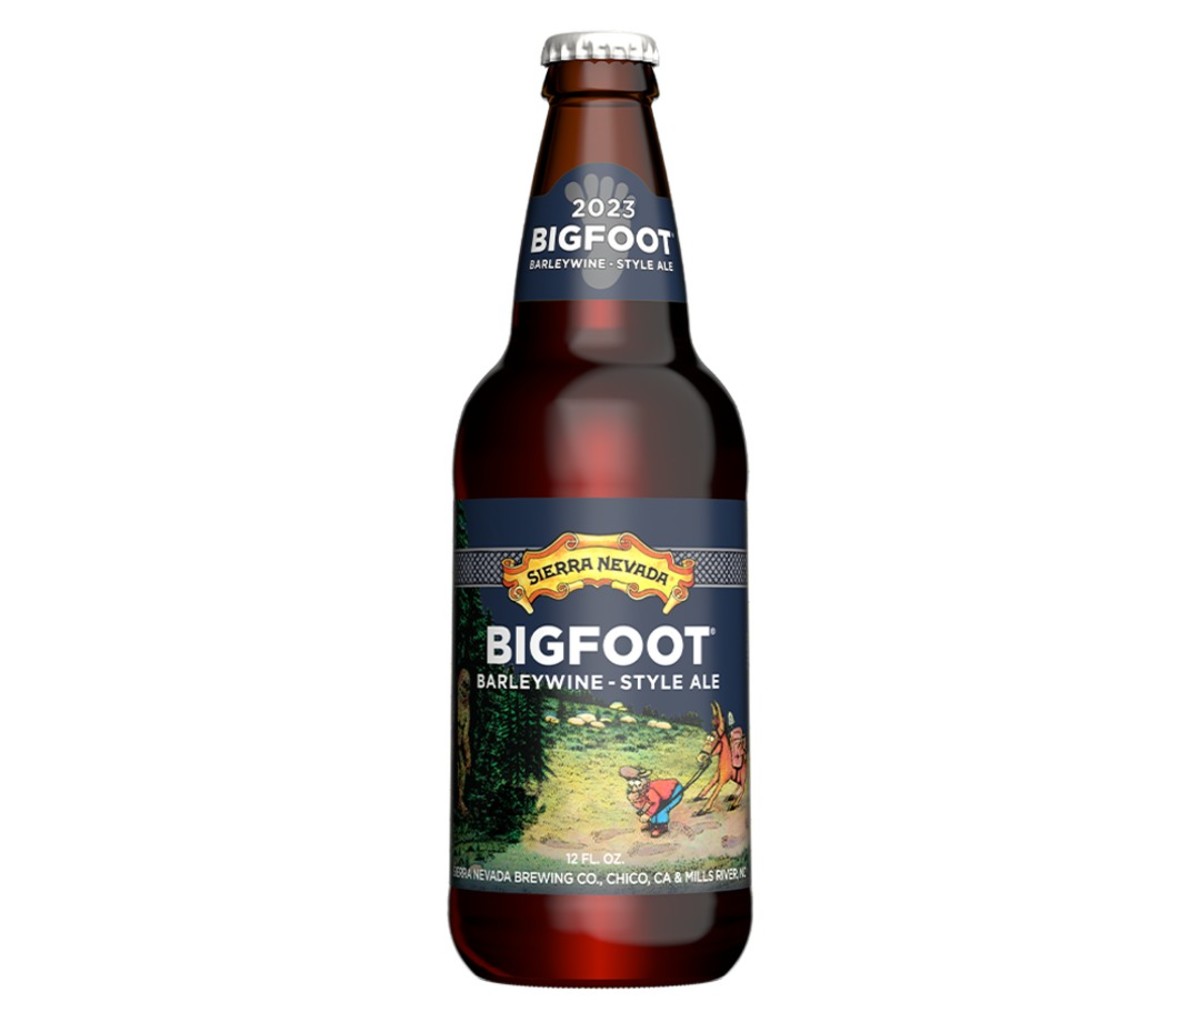 A bottle of Sierra Nevada Bigfoot Barleywine